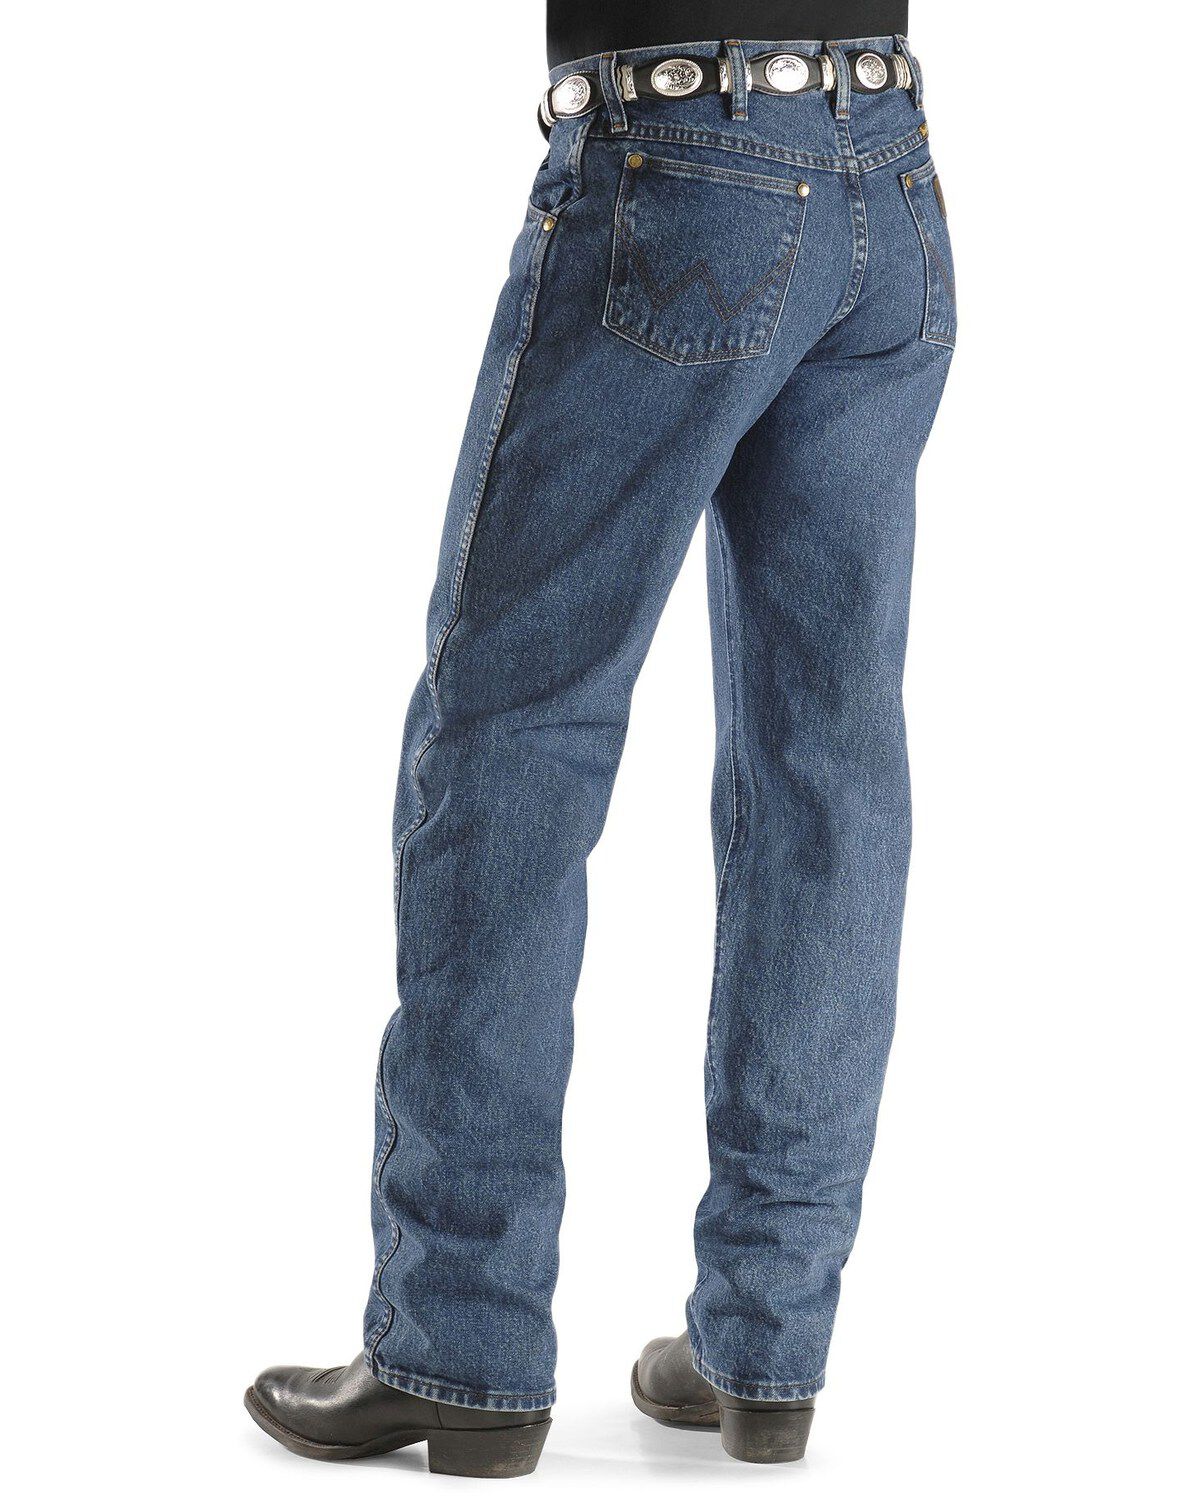 wrangler classic fit mens jeans